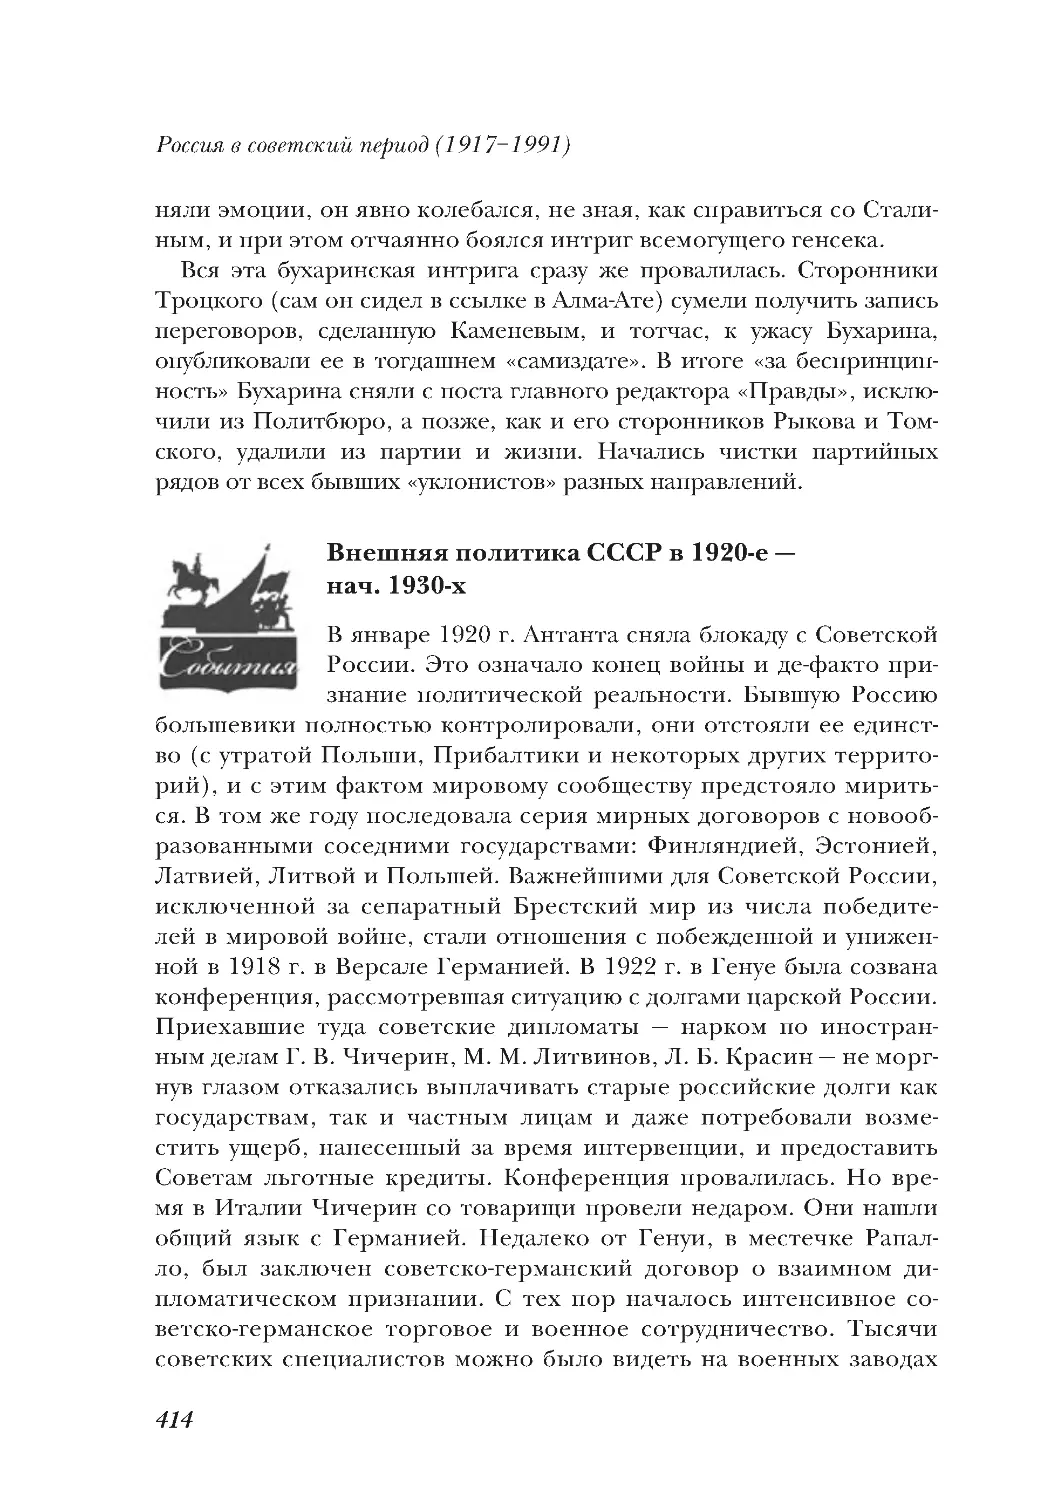 Внешняя политика СССР в 1920-е — нач. 1930-х